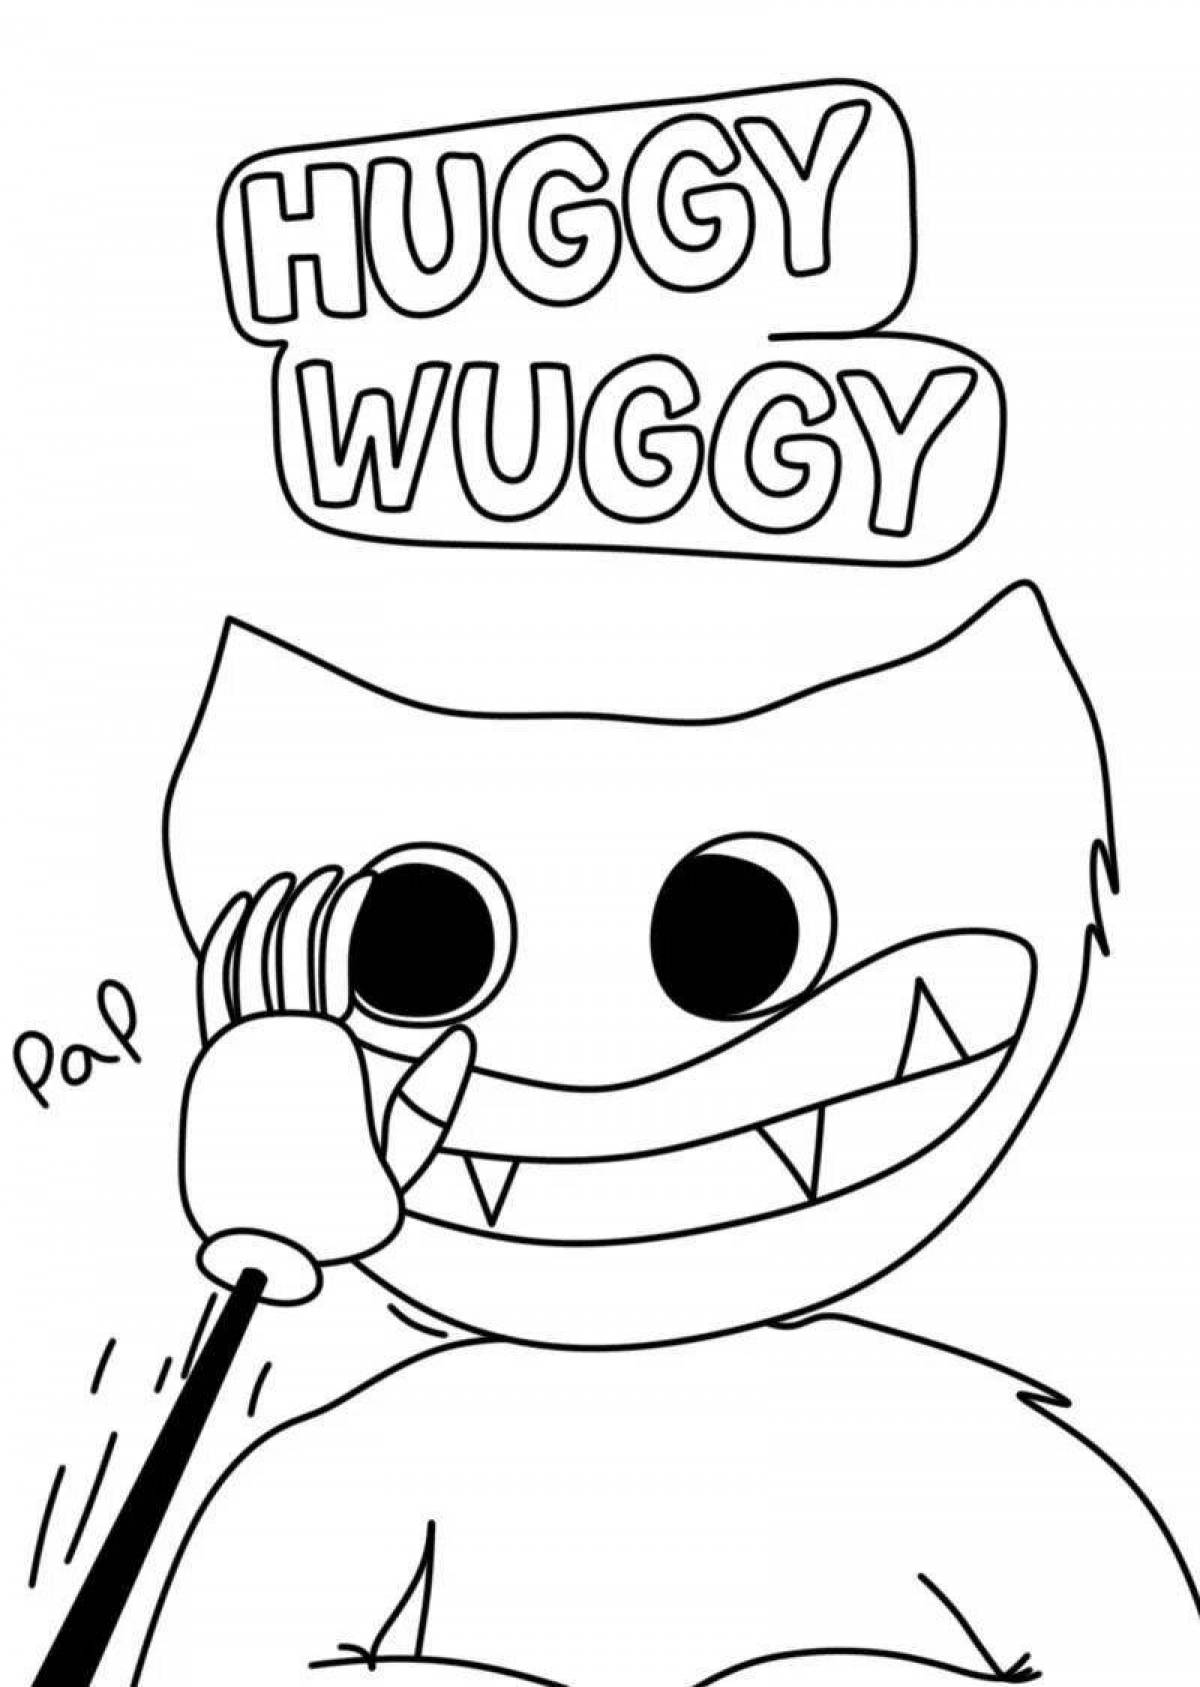 Funny wagga drawing